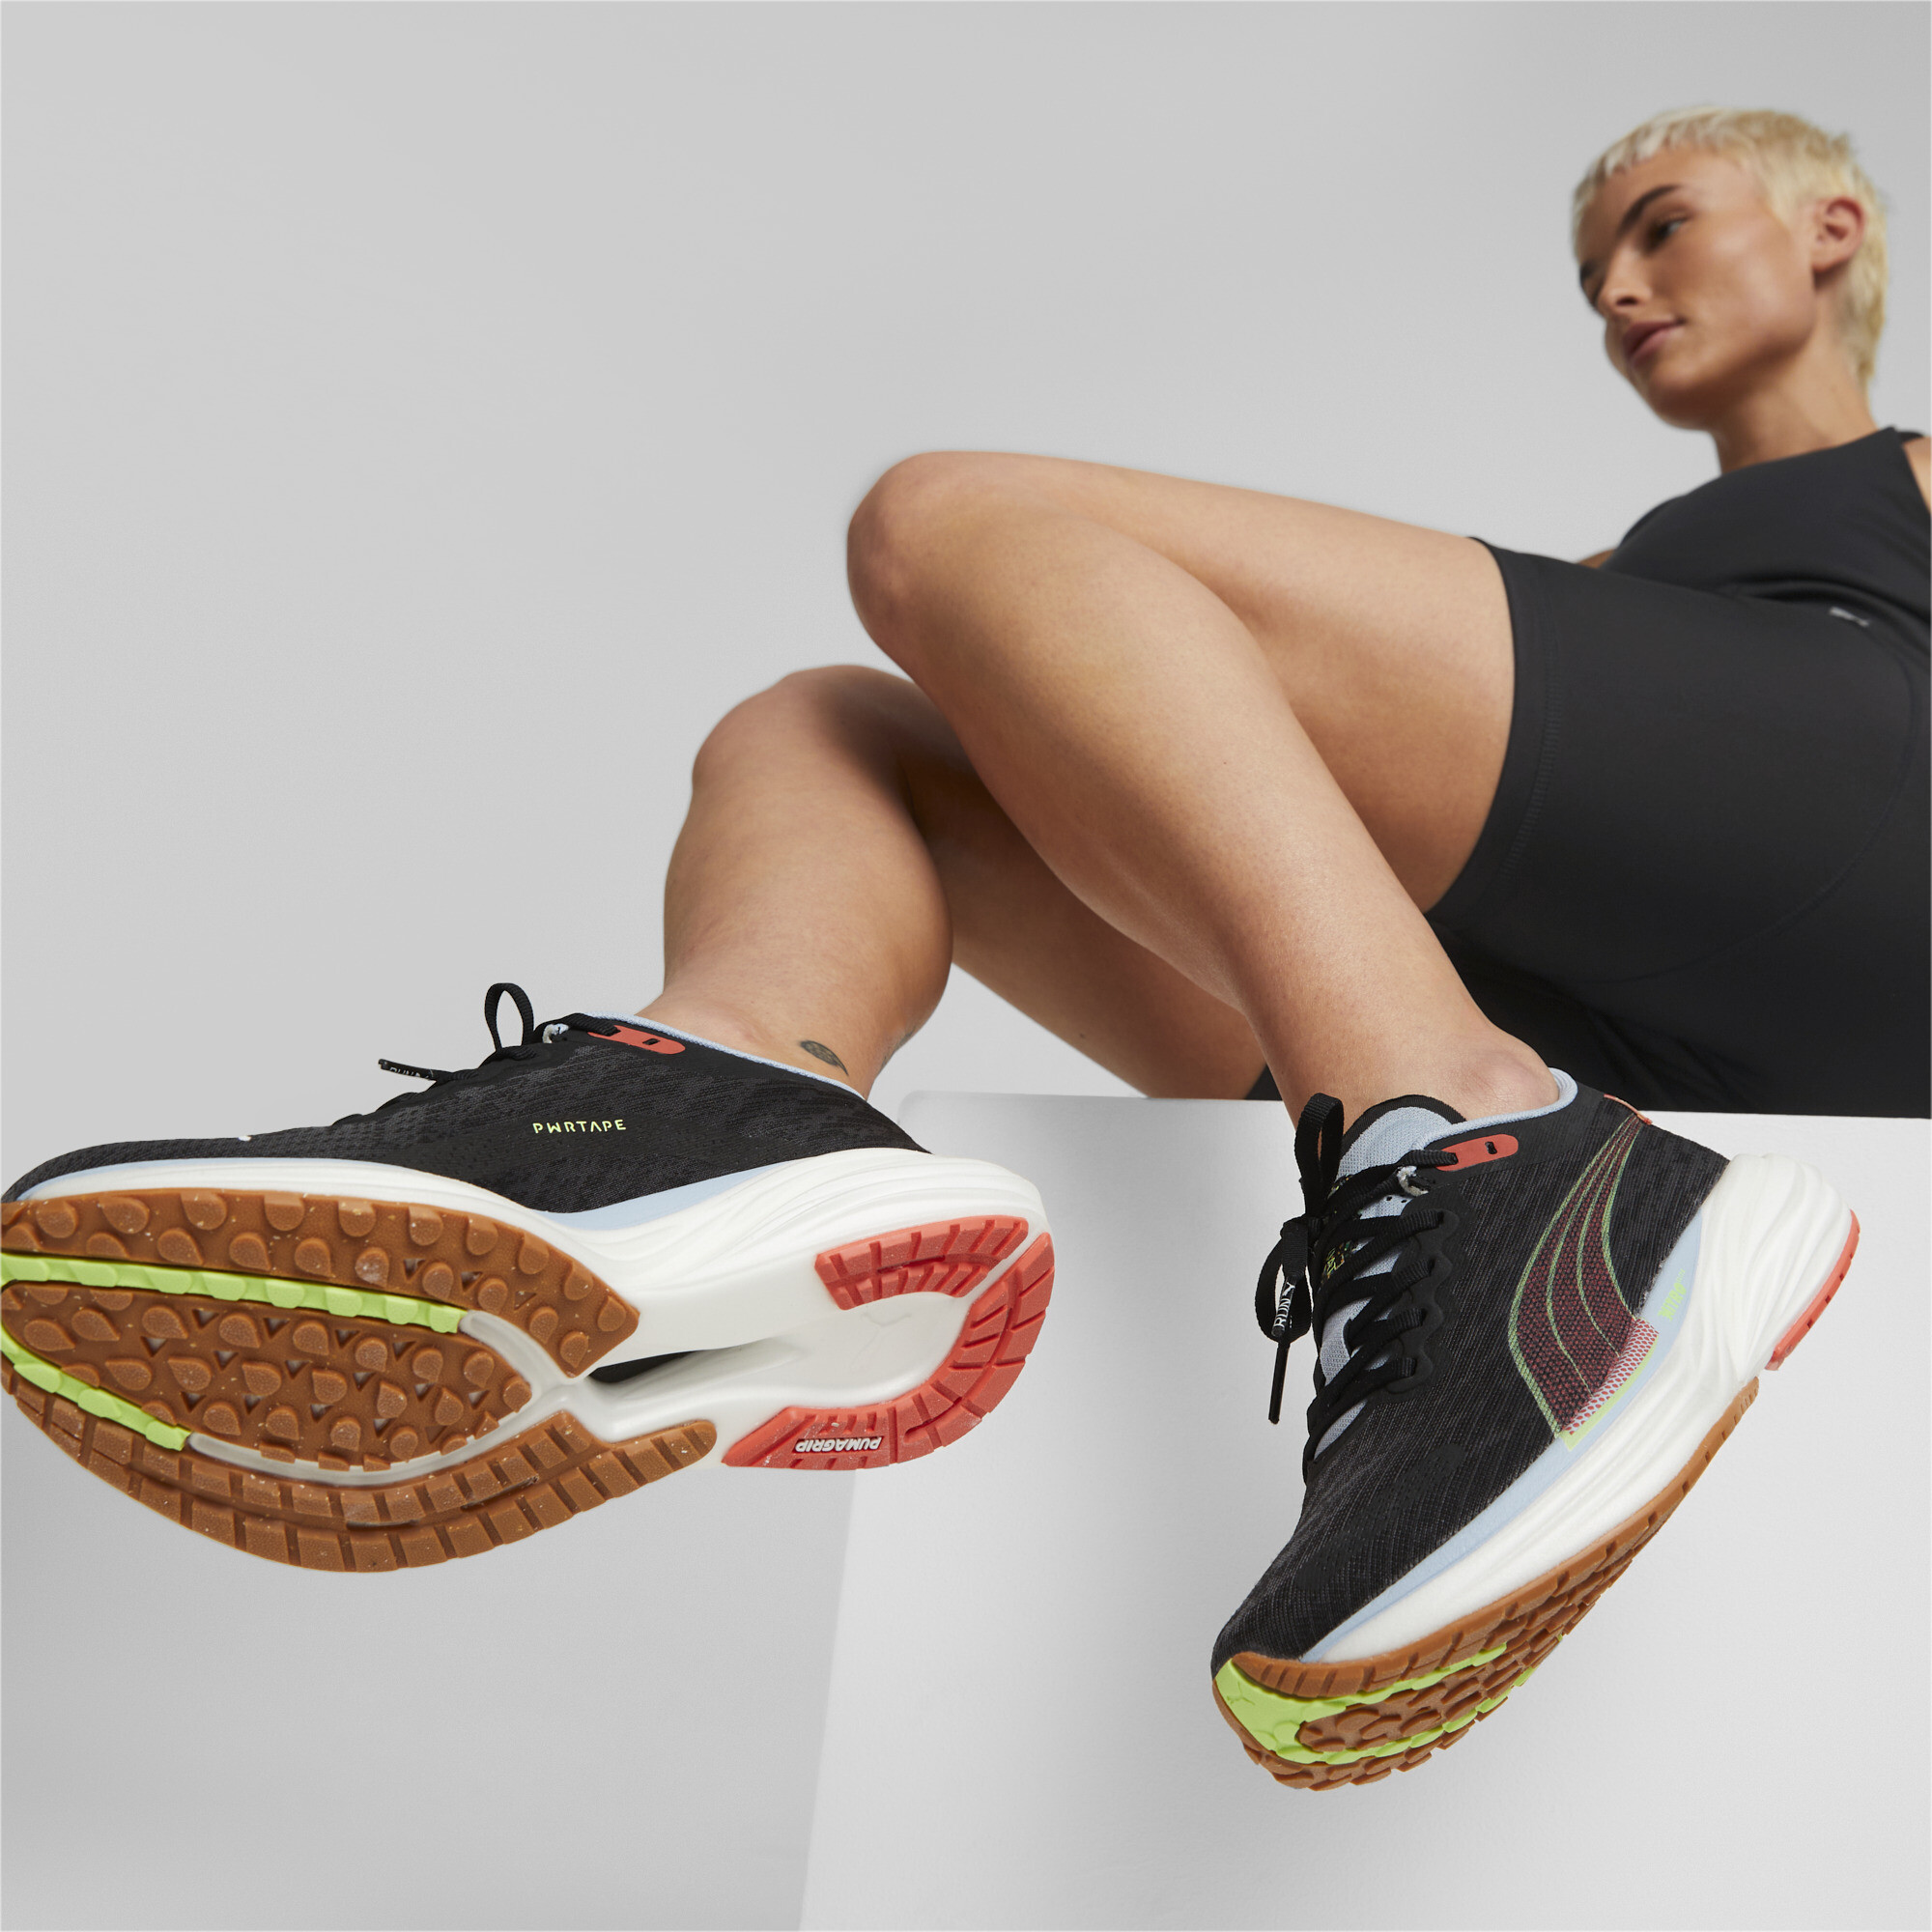 Women's PUMA X FIRST MILE Deviate NITRO 2 Running Shoes Women In Black, Size EU 38